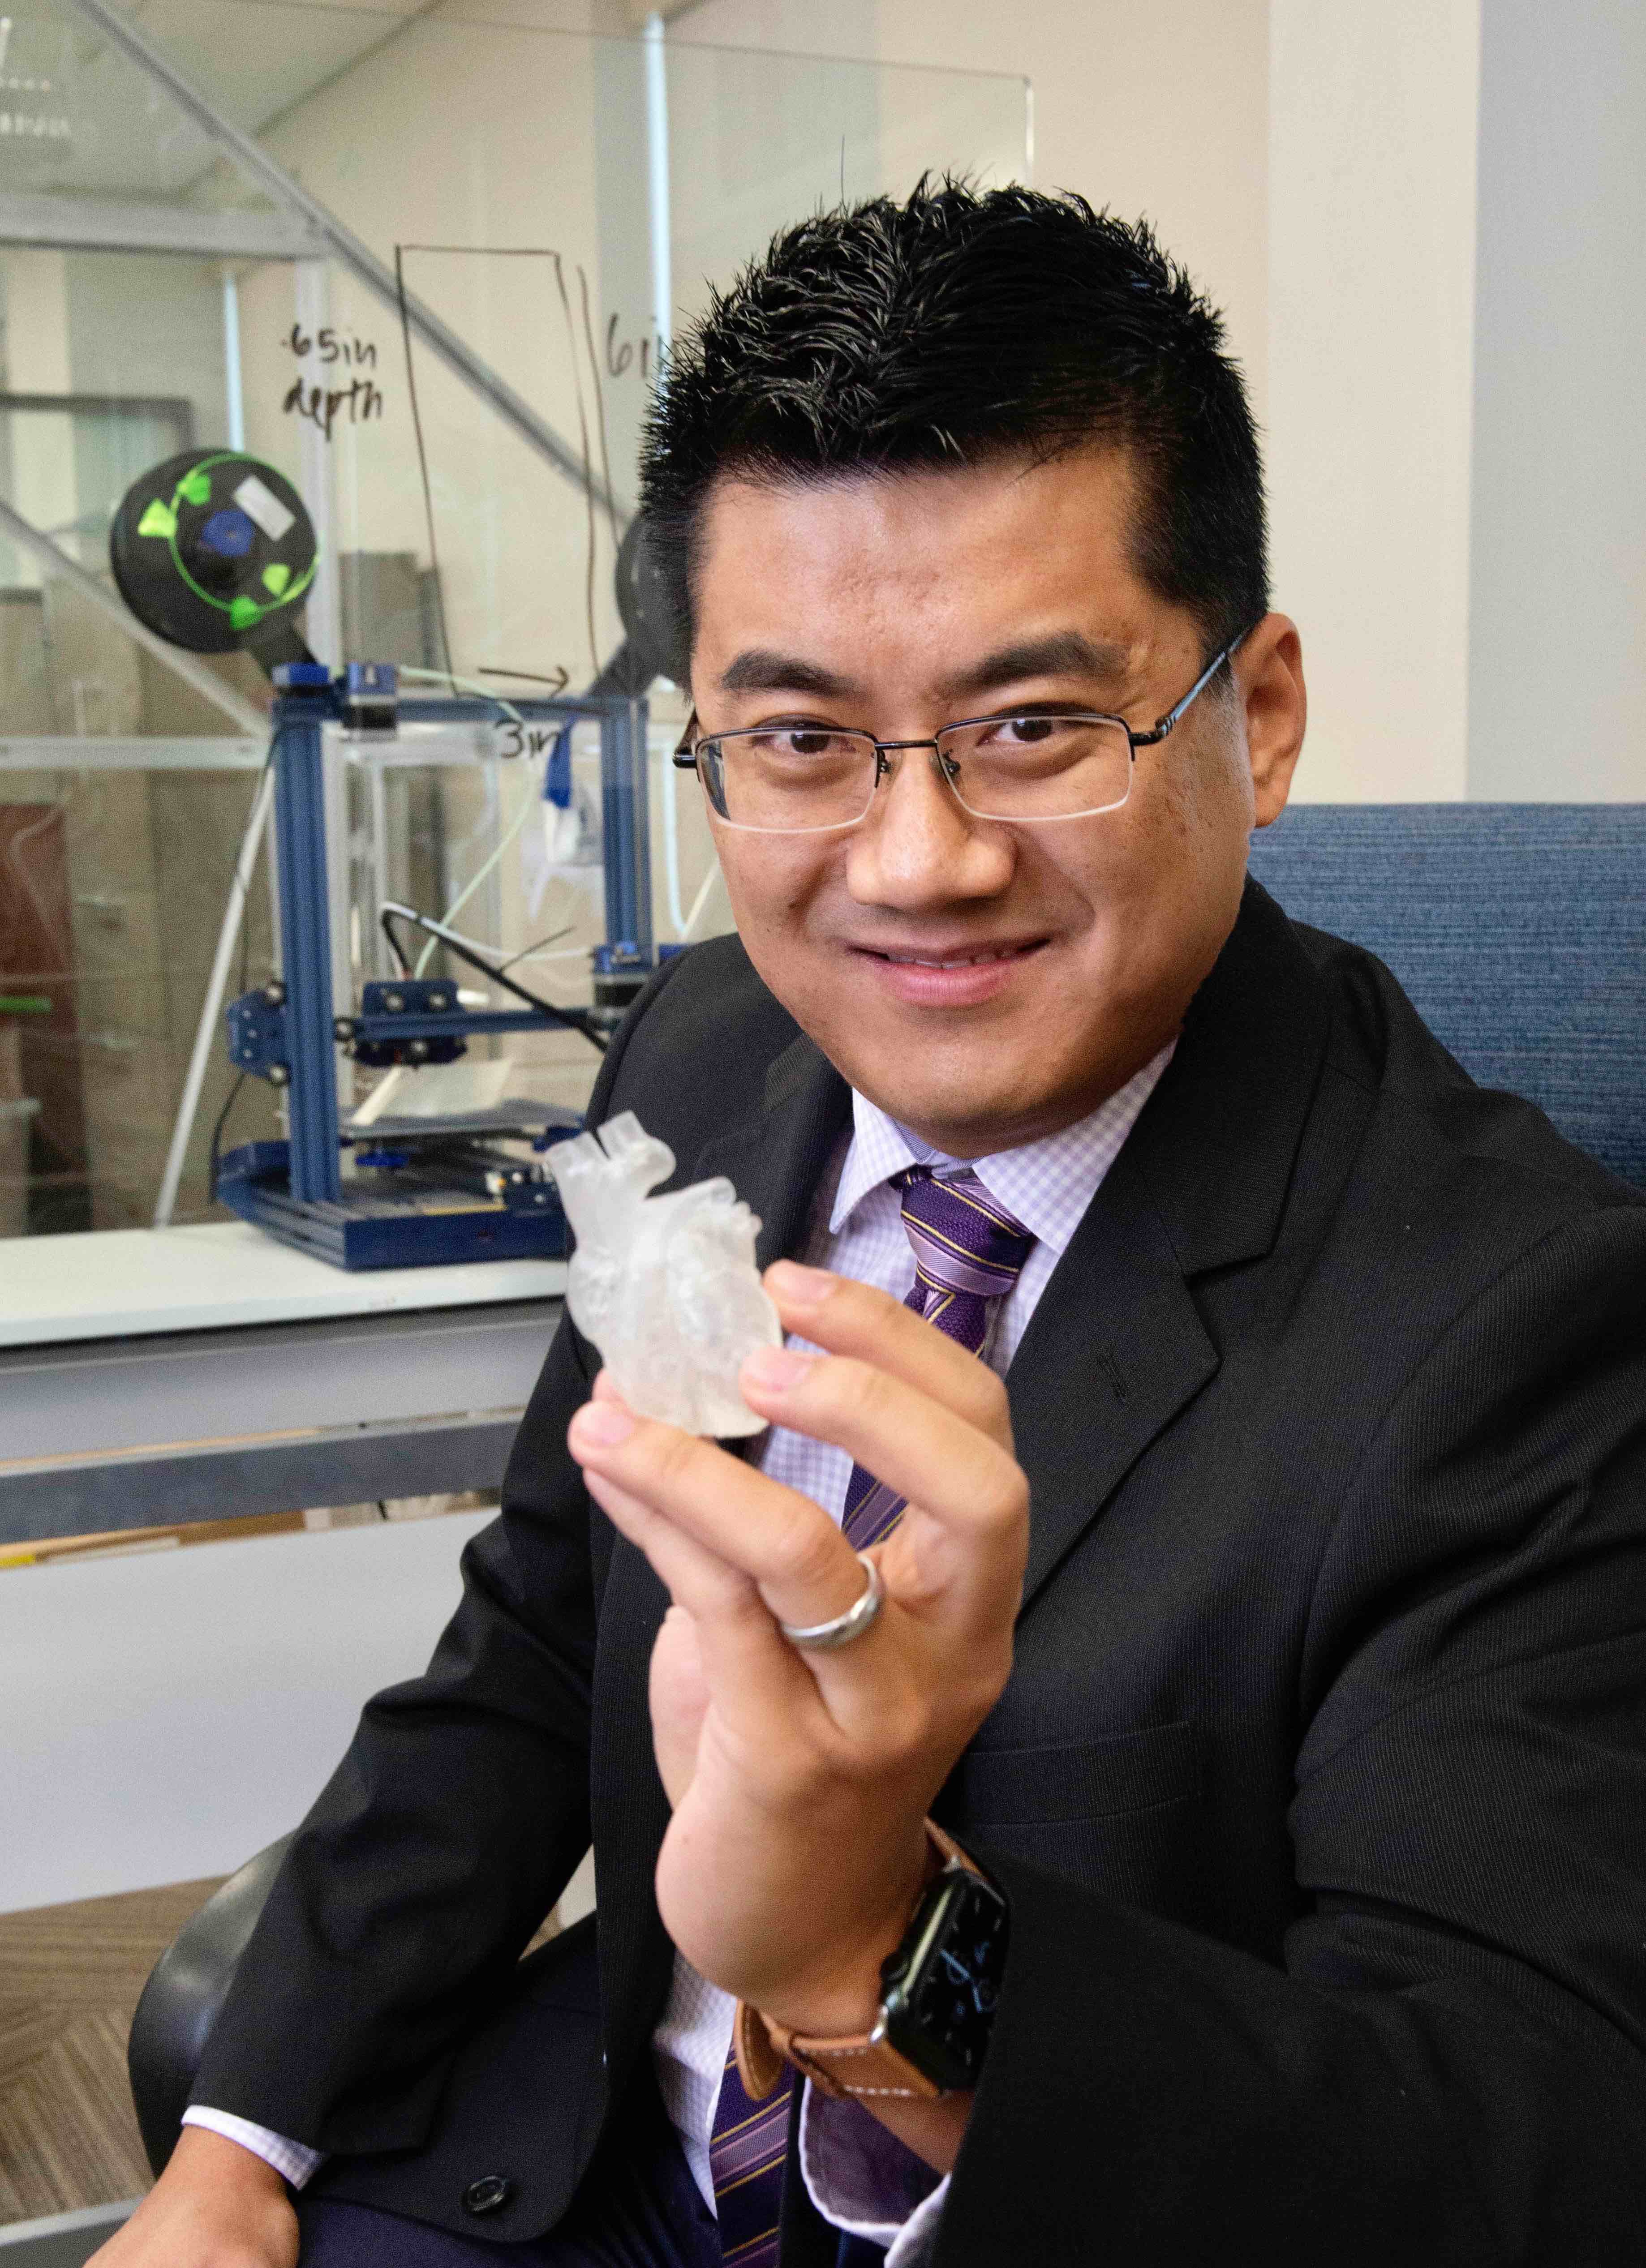 Dr. Tan Receives Junior Investigator Research Award